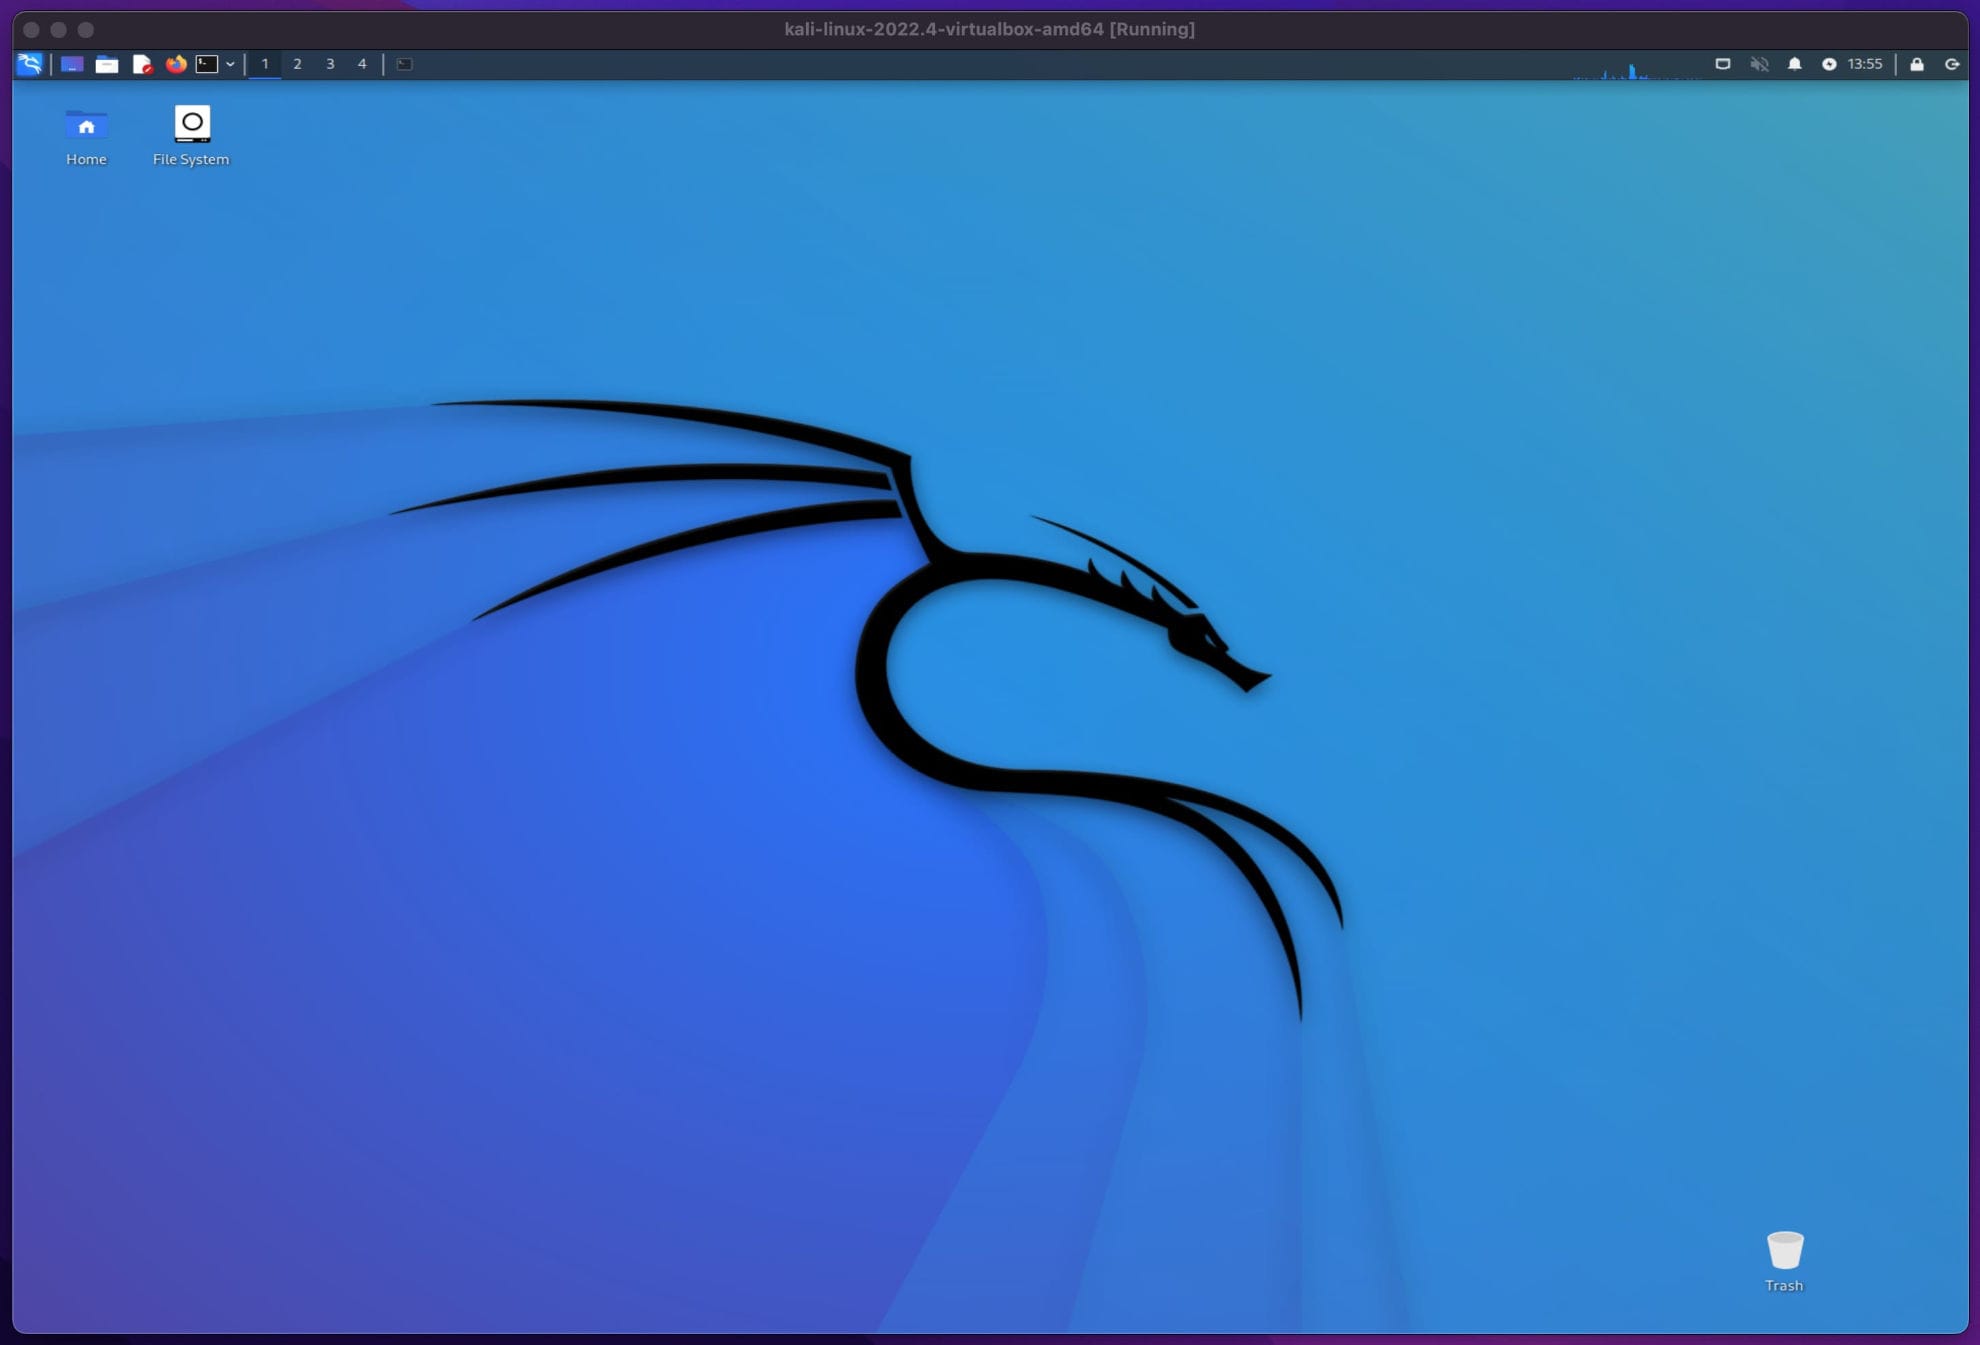 Desktop Kali Linux with autologin enabled